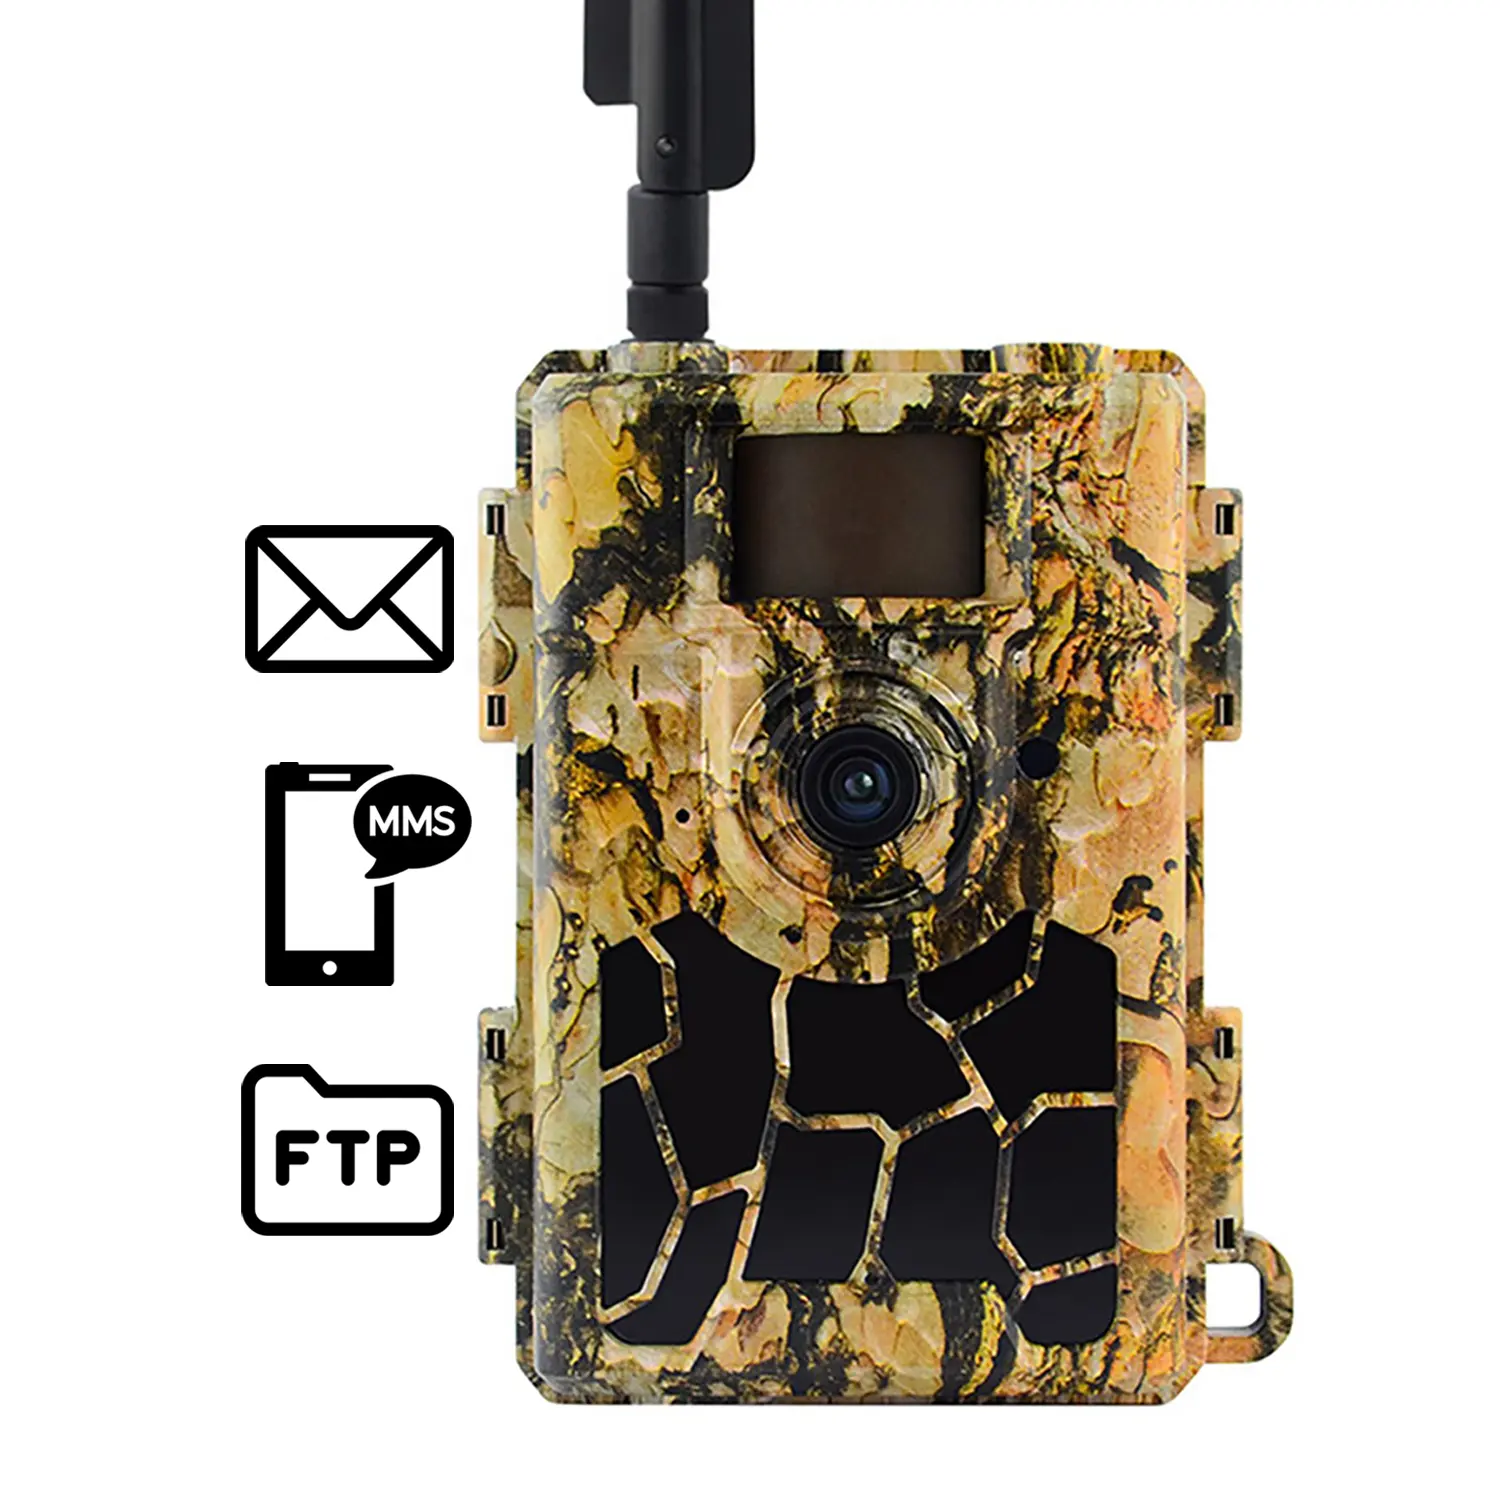 WILLFINE mobilfunk 4g 5g smtp spurenkamera mini ip66 wasserdichte jagdspurenkamera